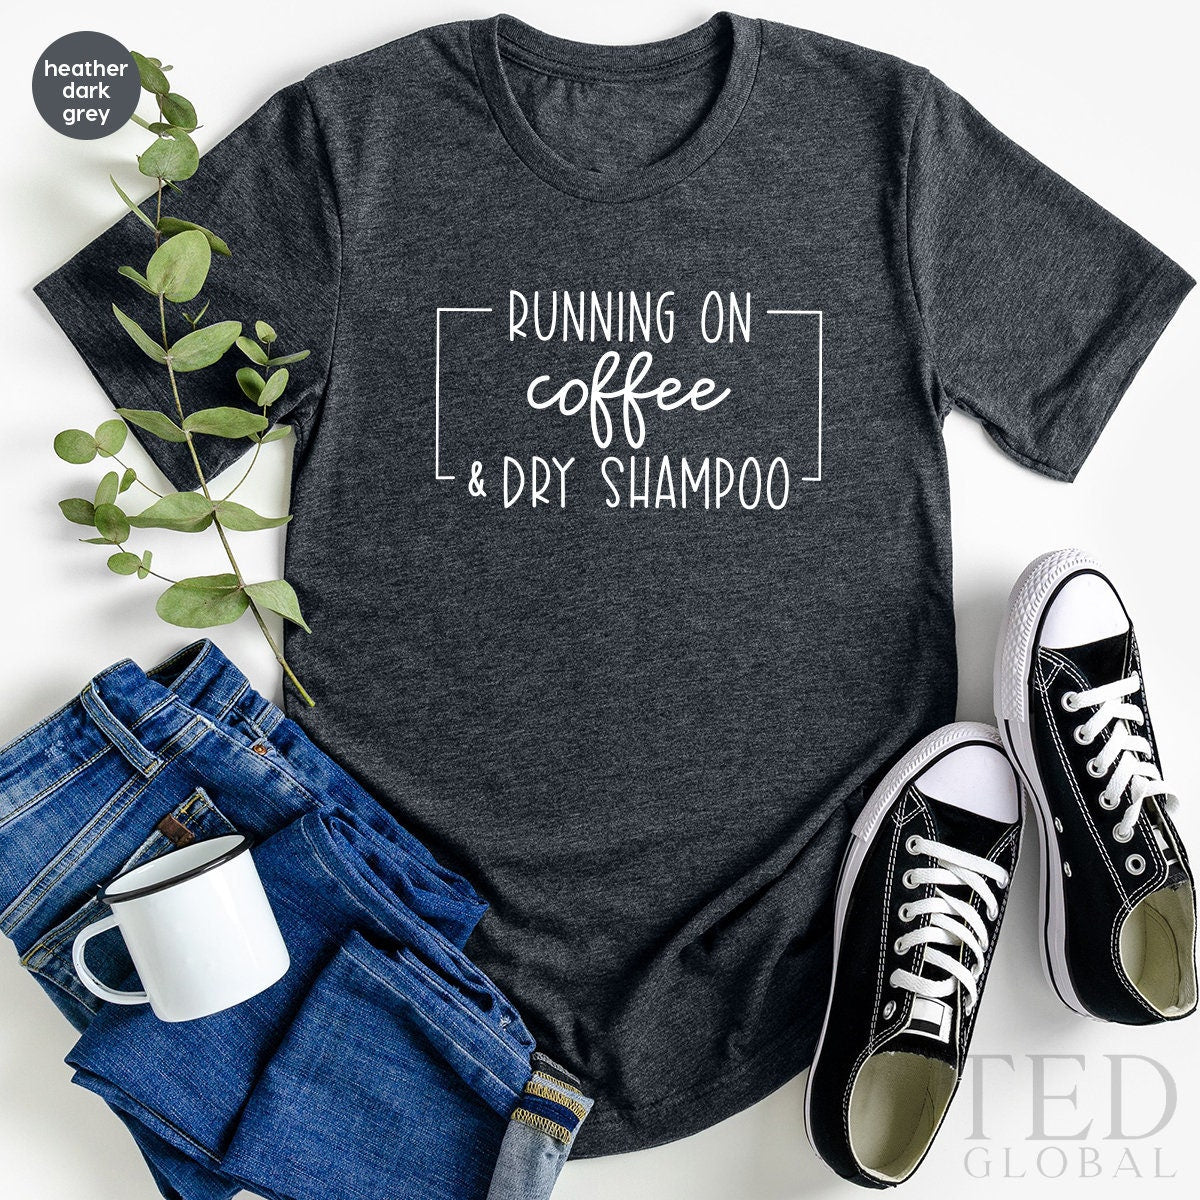 Mom Life T-Shirt,Busy Womens T Shirt,Funny Shirt With Sayings,New Mom Shirts,Running On Coffee Dry Shampoo Shirt,Coffee Lover Clothing - Fastdeliverytees.com